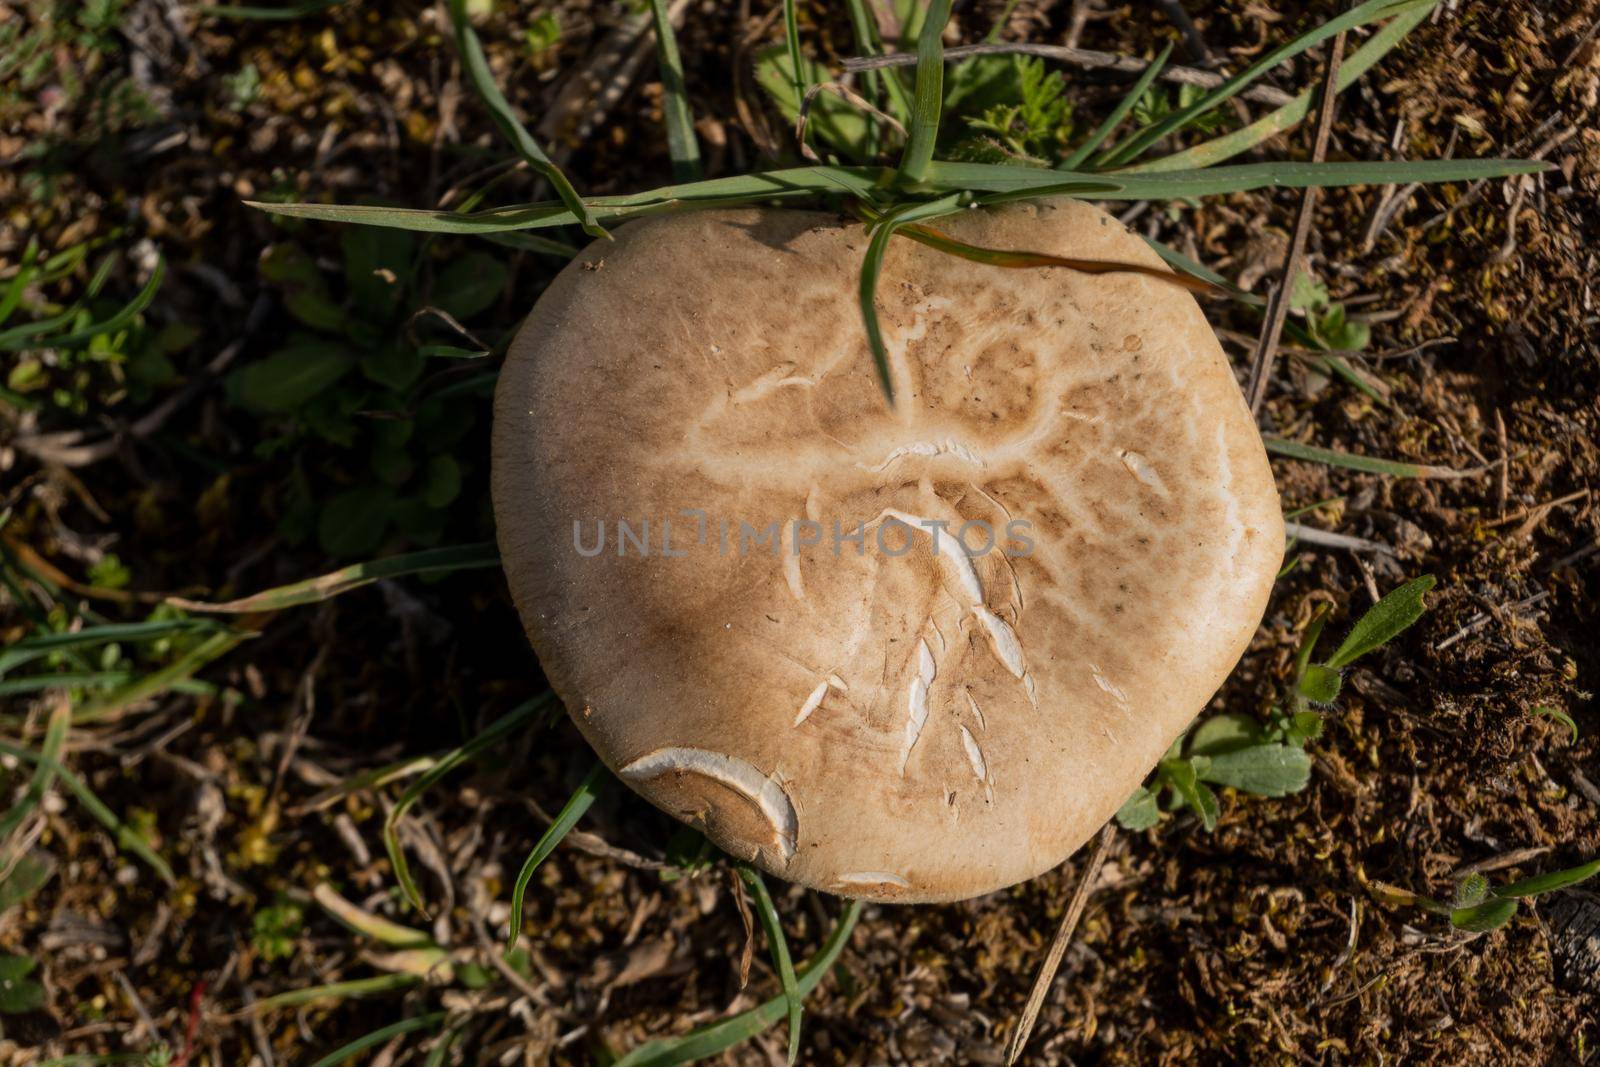 thistle mushroom in the field pleurotus ostreatus by joseantona